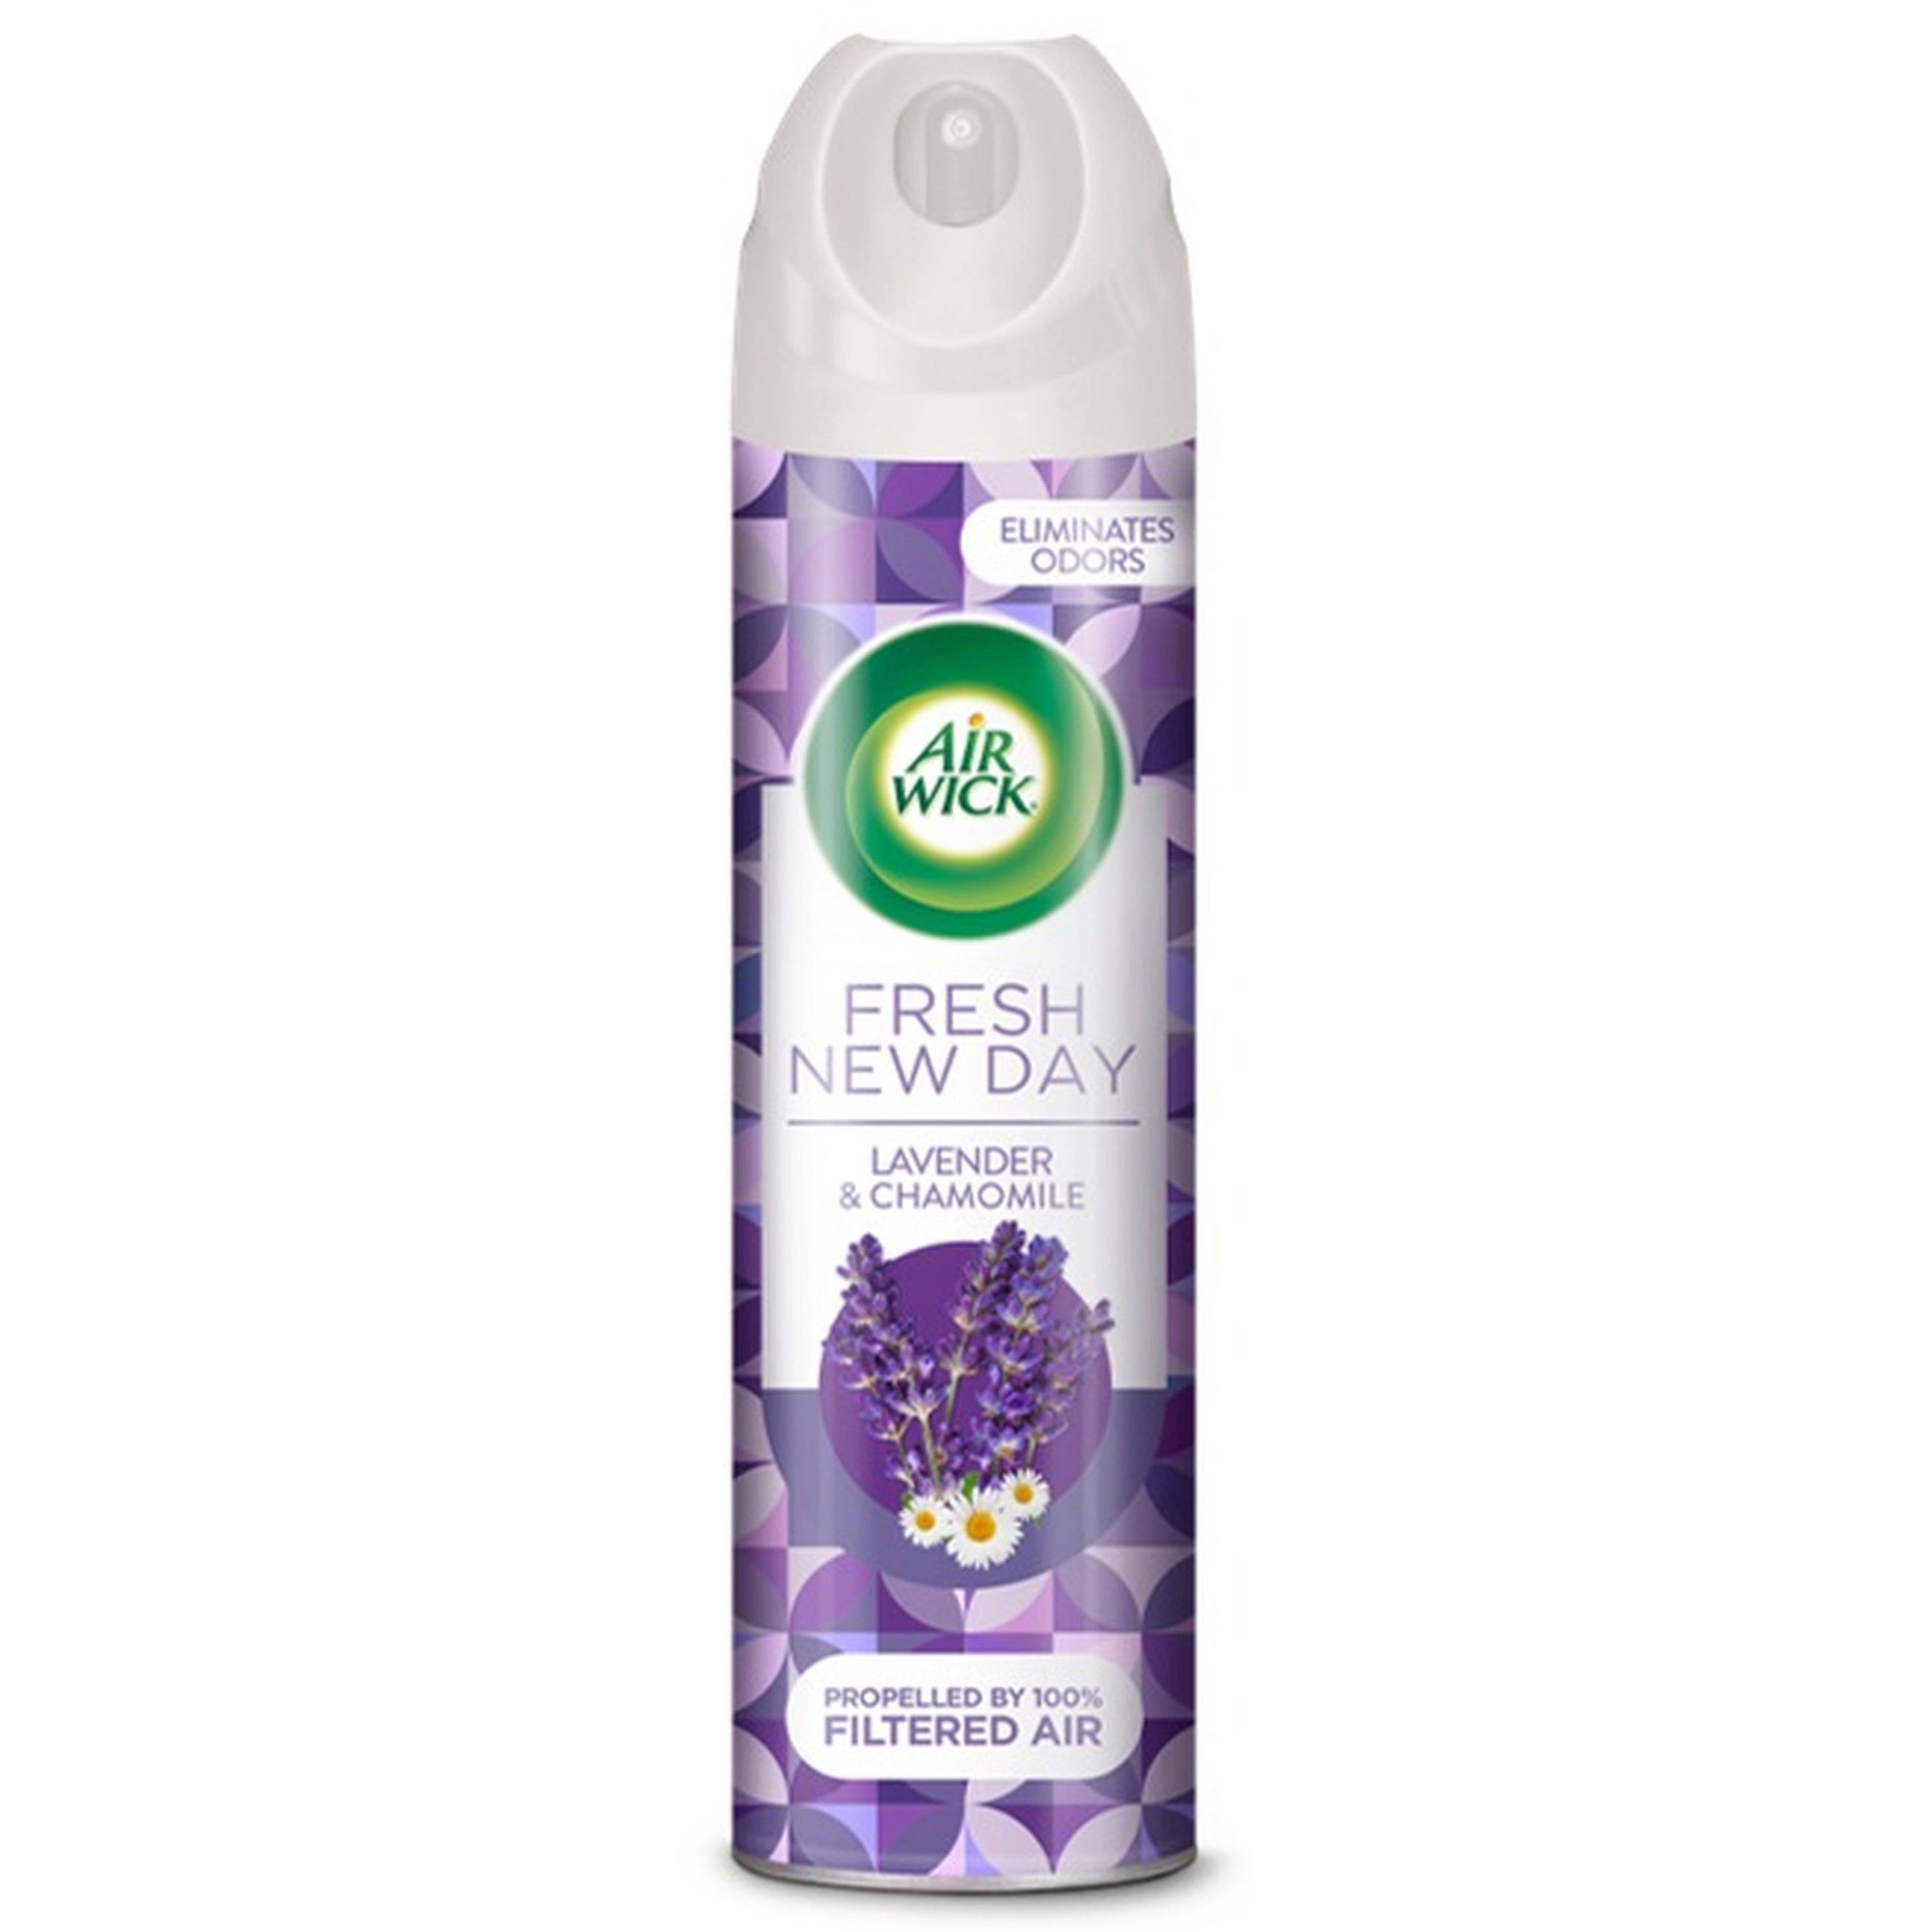 Air Wick 4 In 1 Air Freshener Spray - Lavender & Chamomile, 8oz